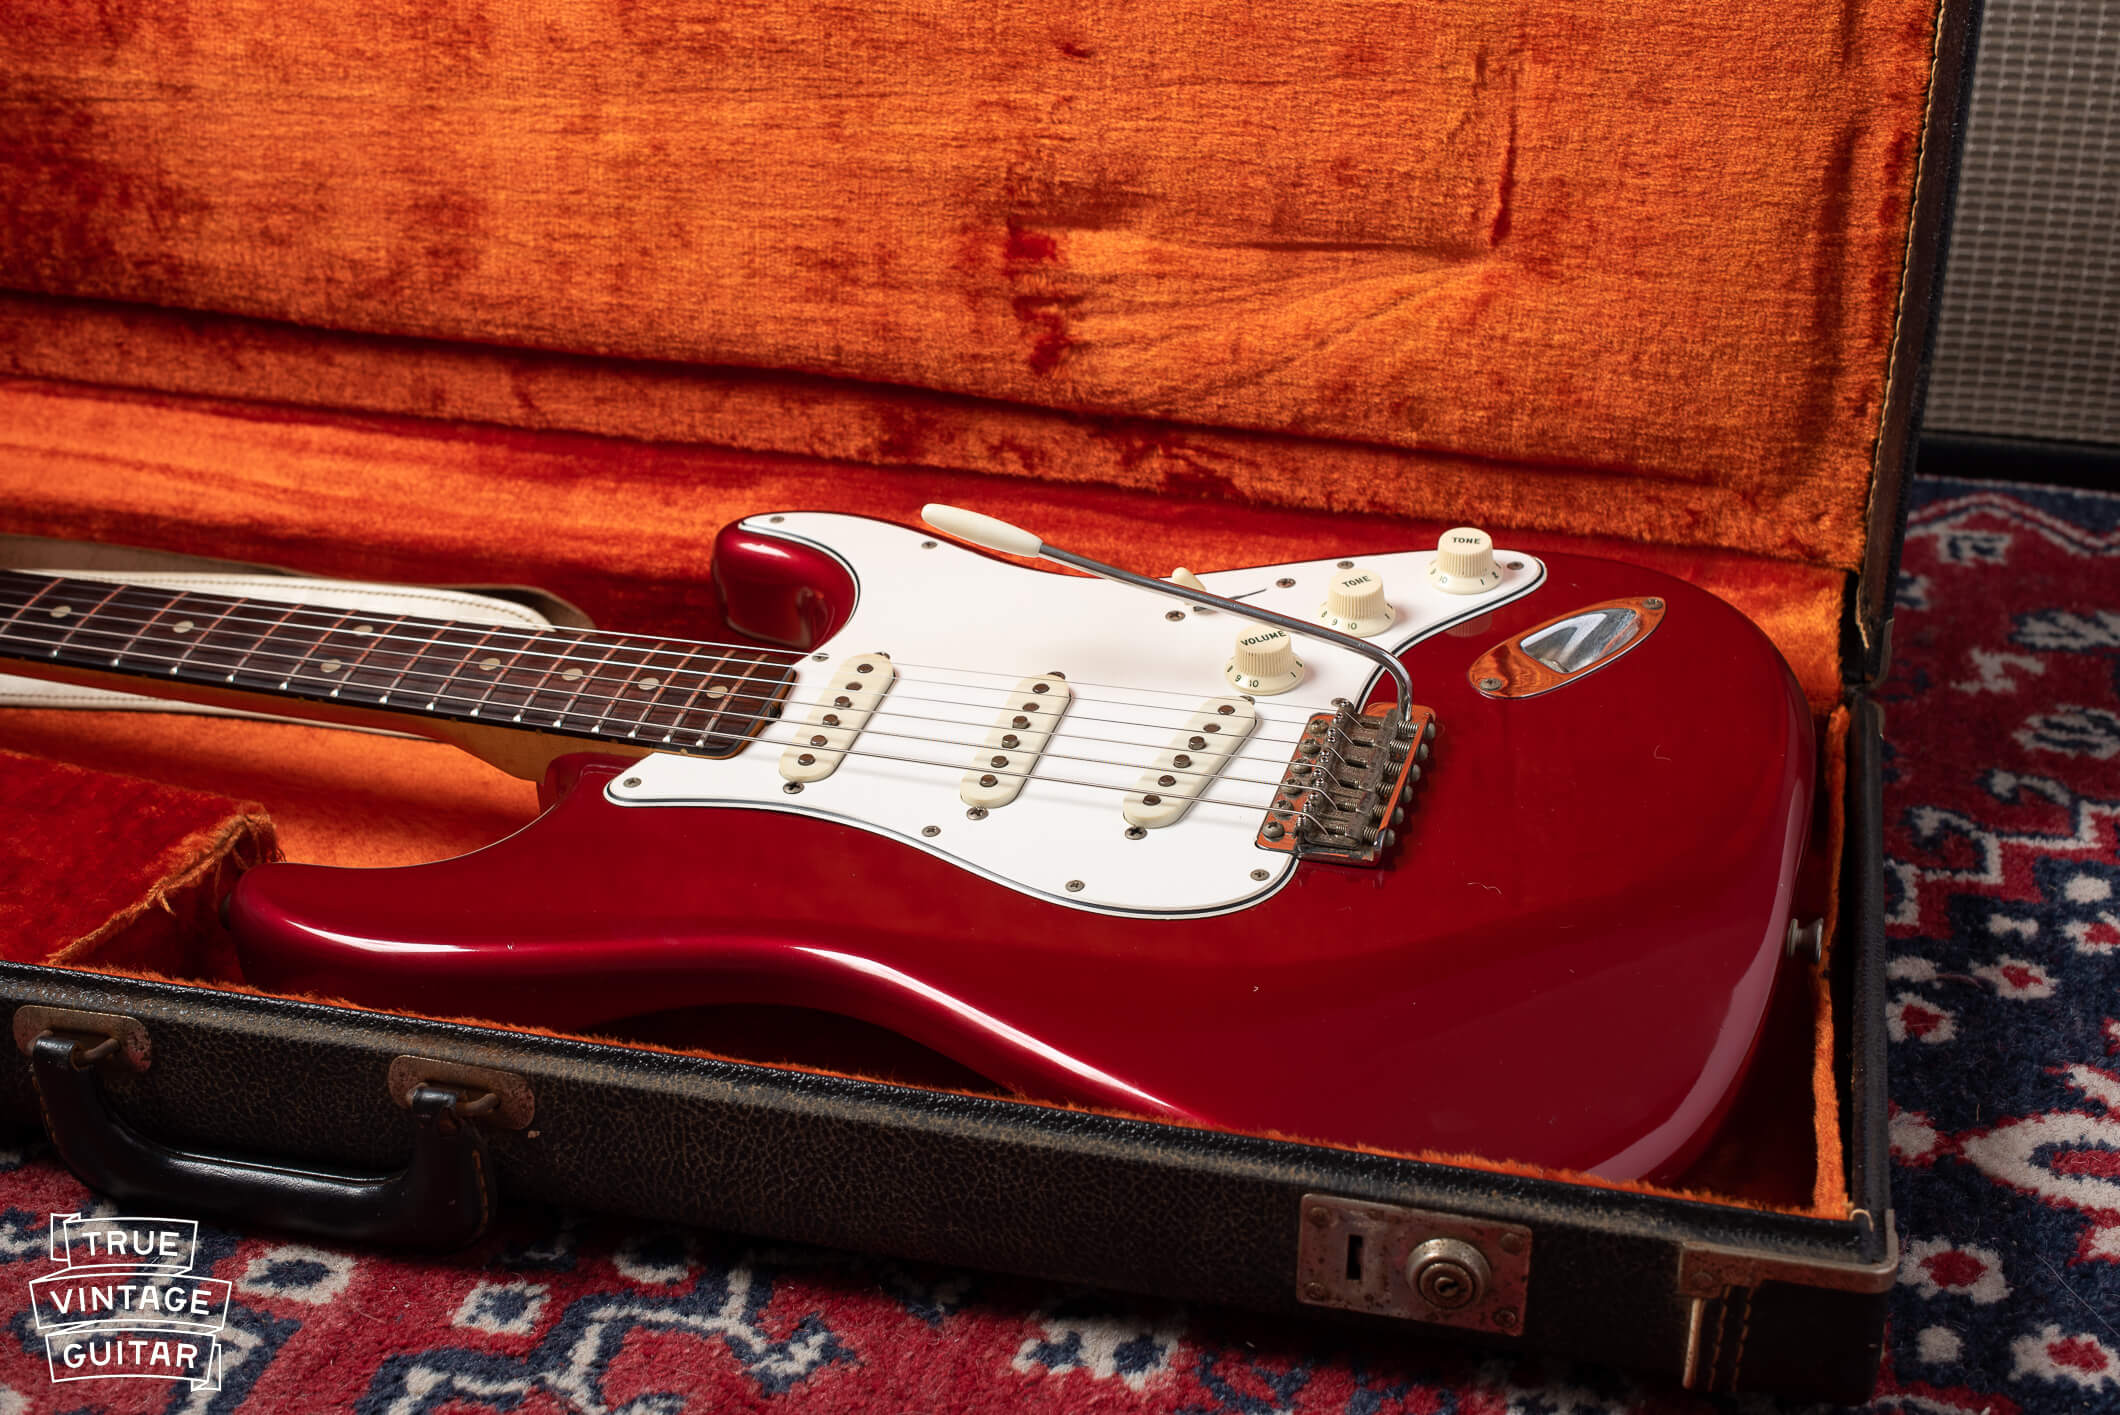 Vintage Fender Stratocaster values for custom colors